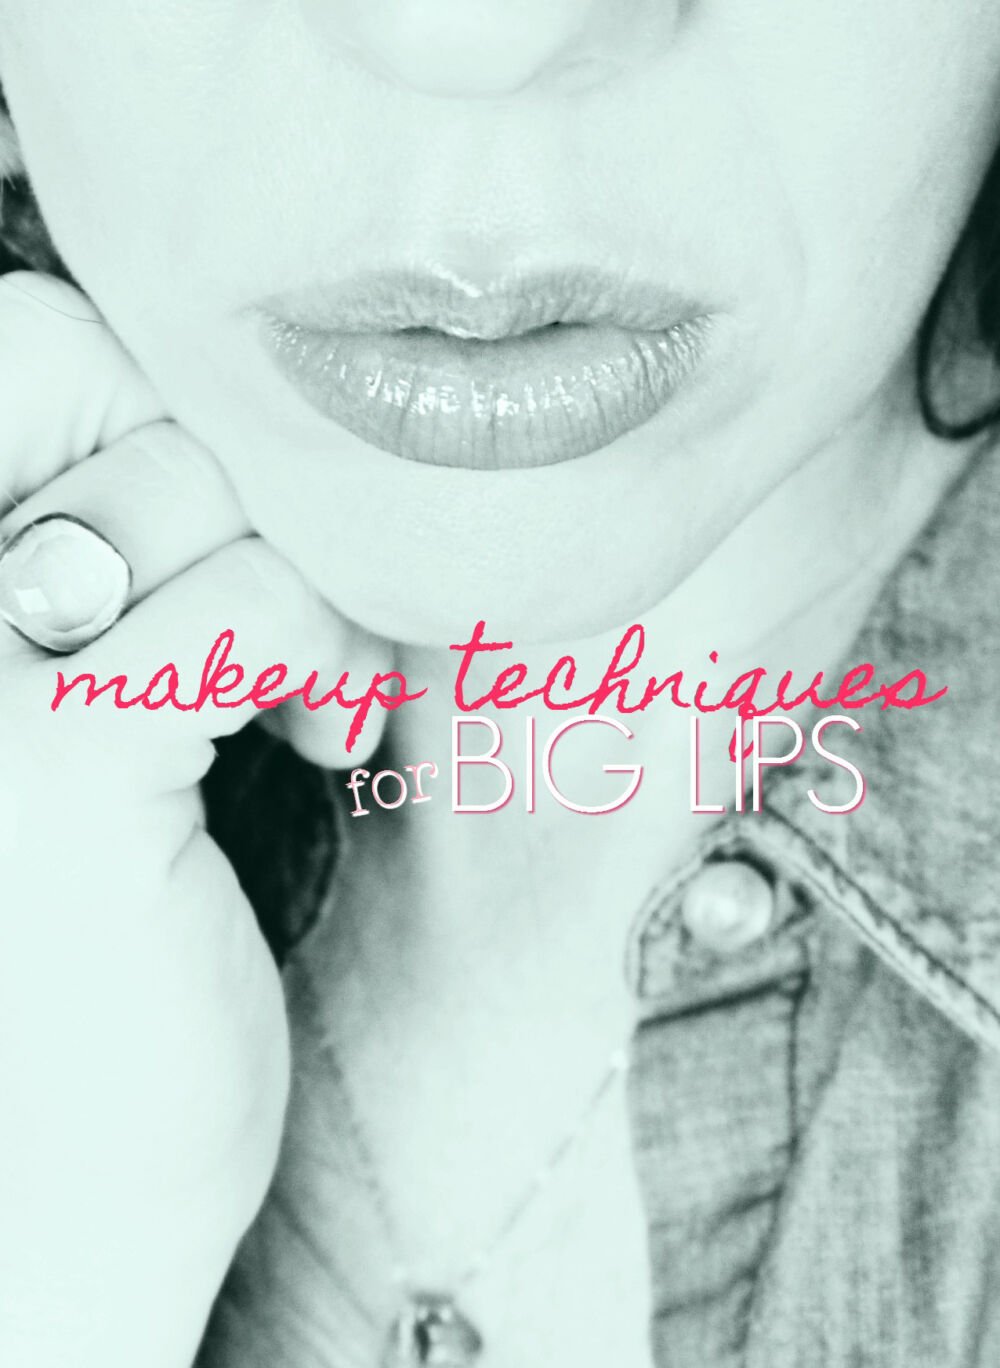 Makeup tutorial for Big Lips